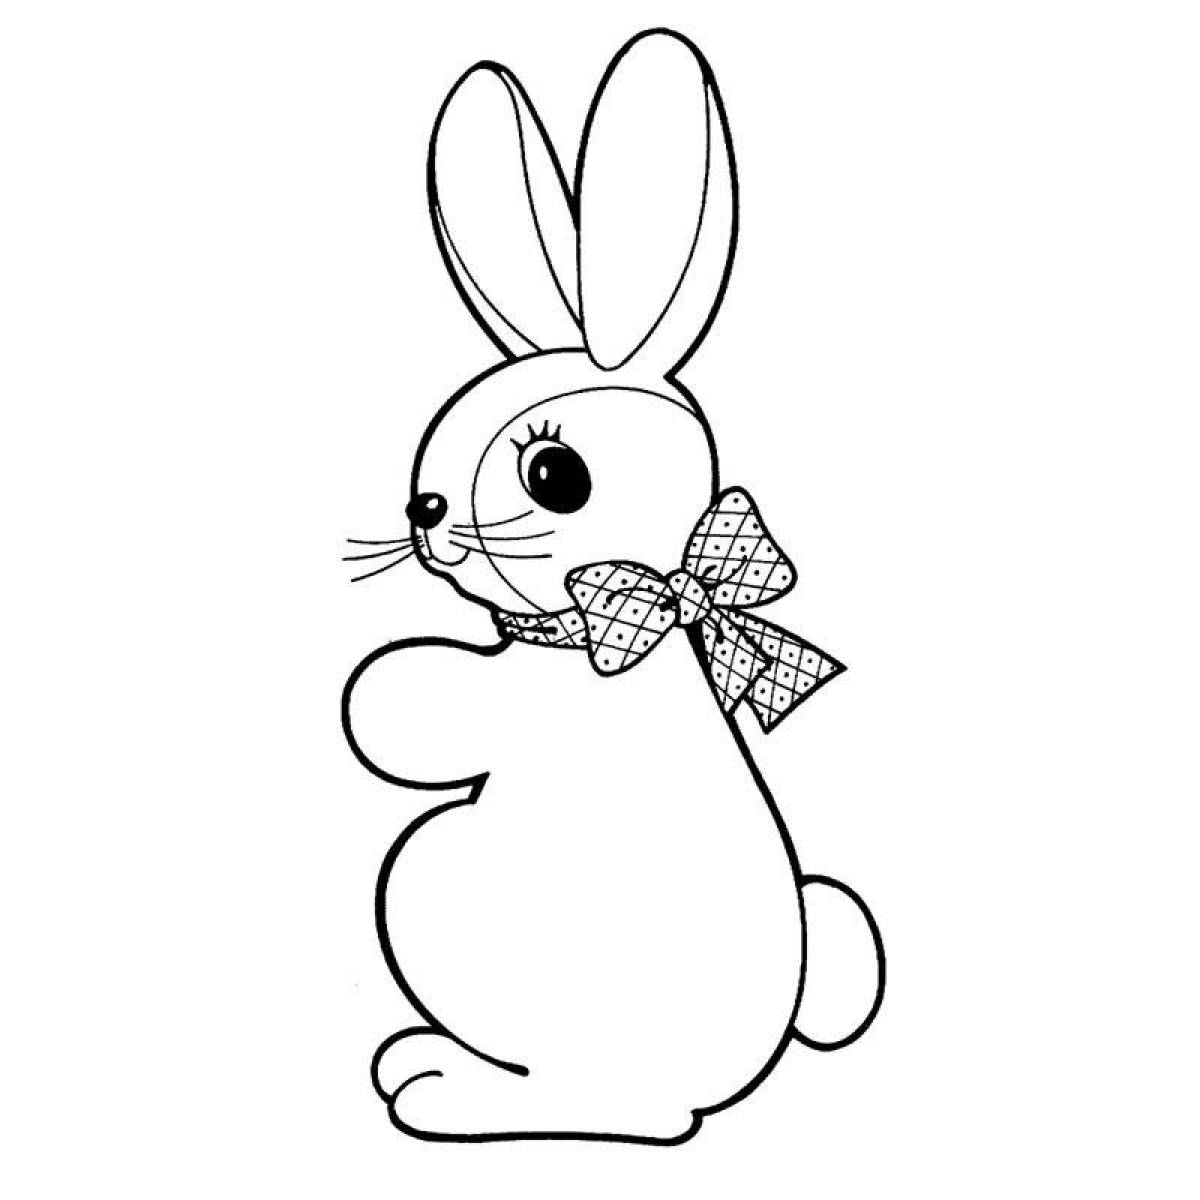 Children's horny bunny coloring book